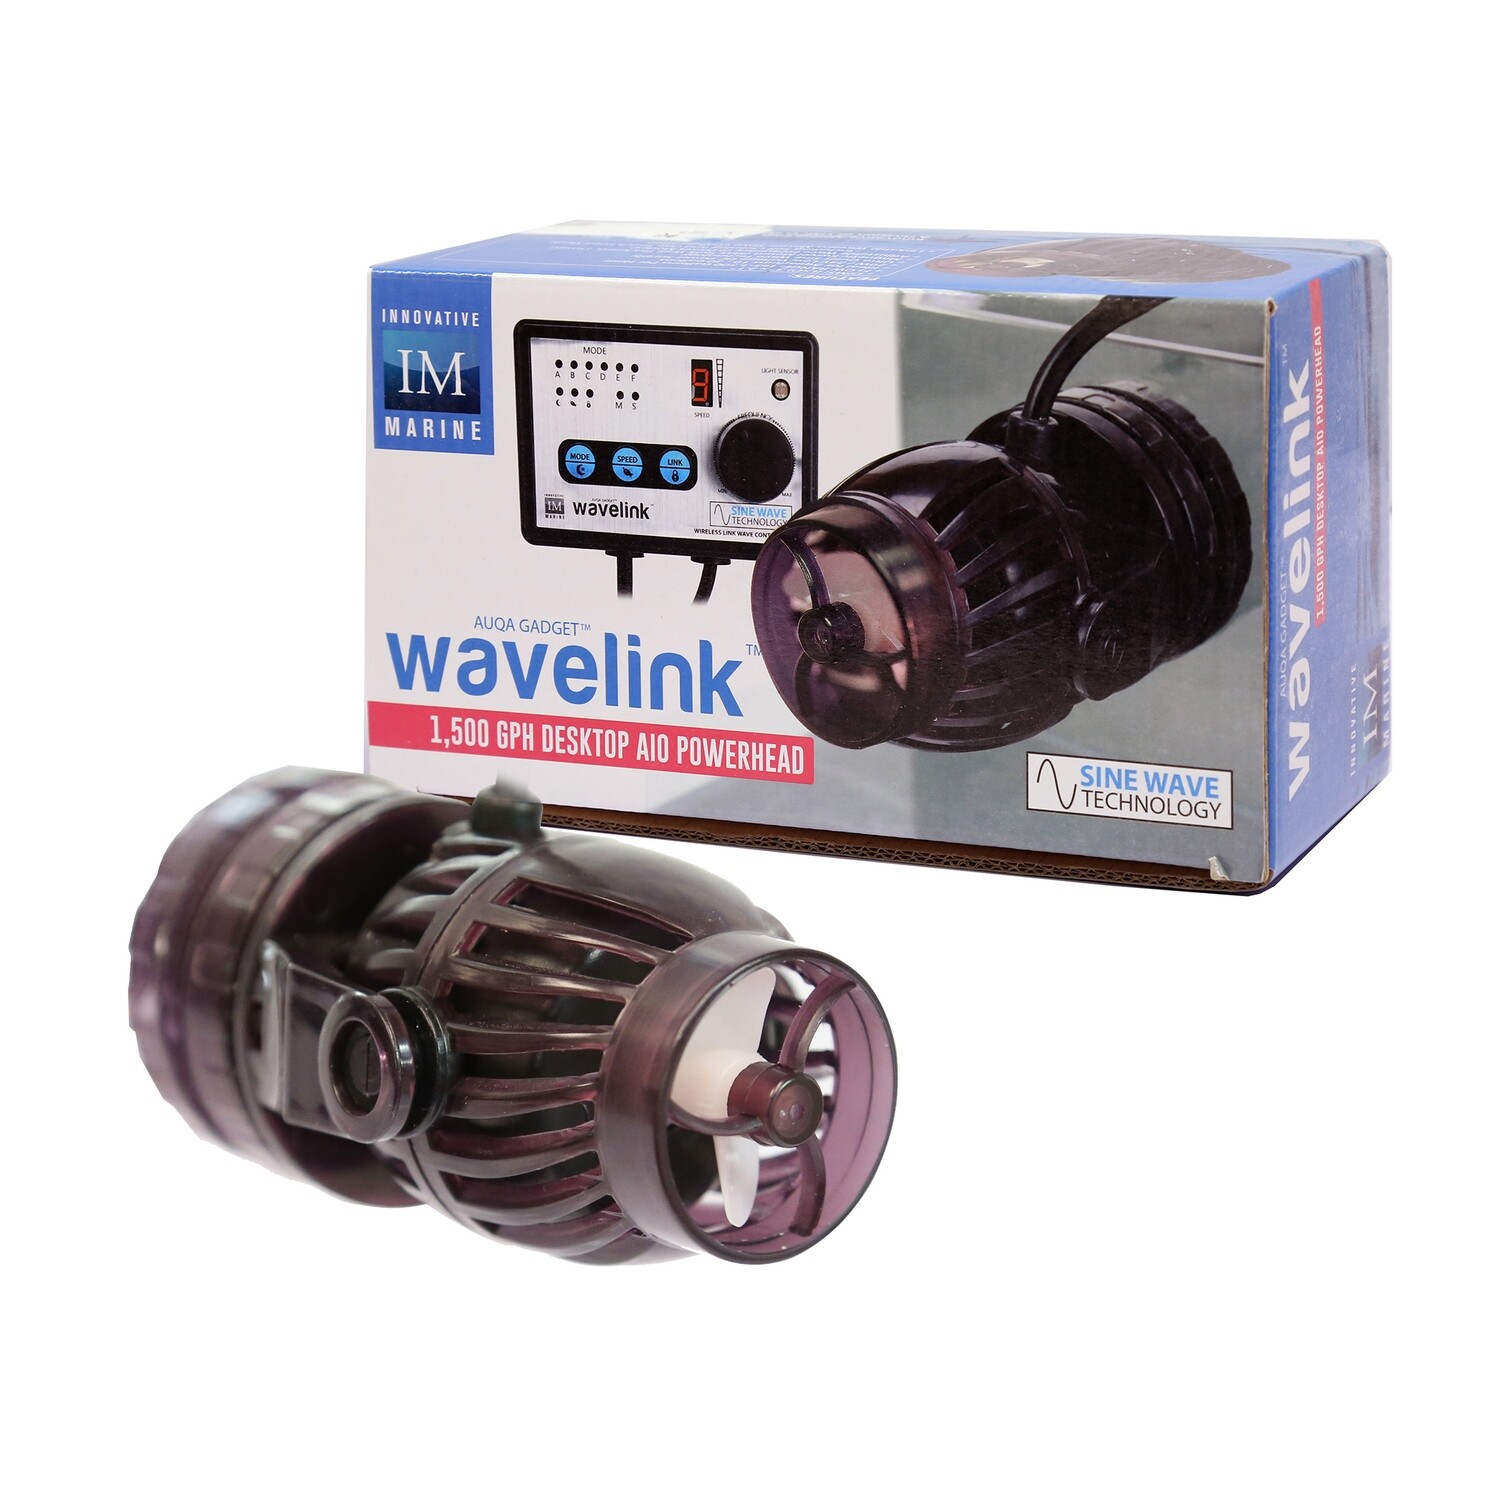 Wavelink™ AIO Powerhead 1500GPH [Desktop]